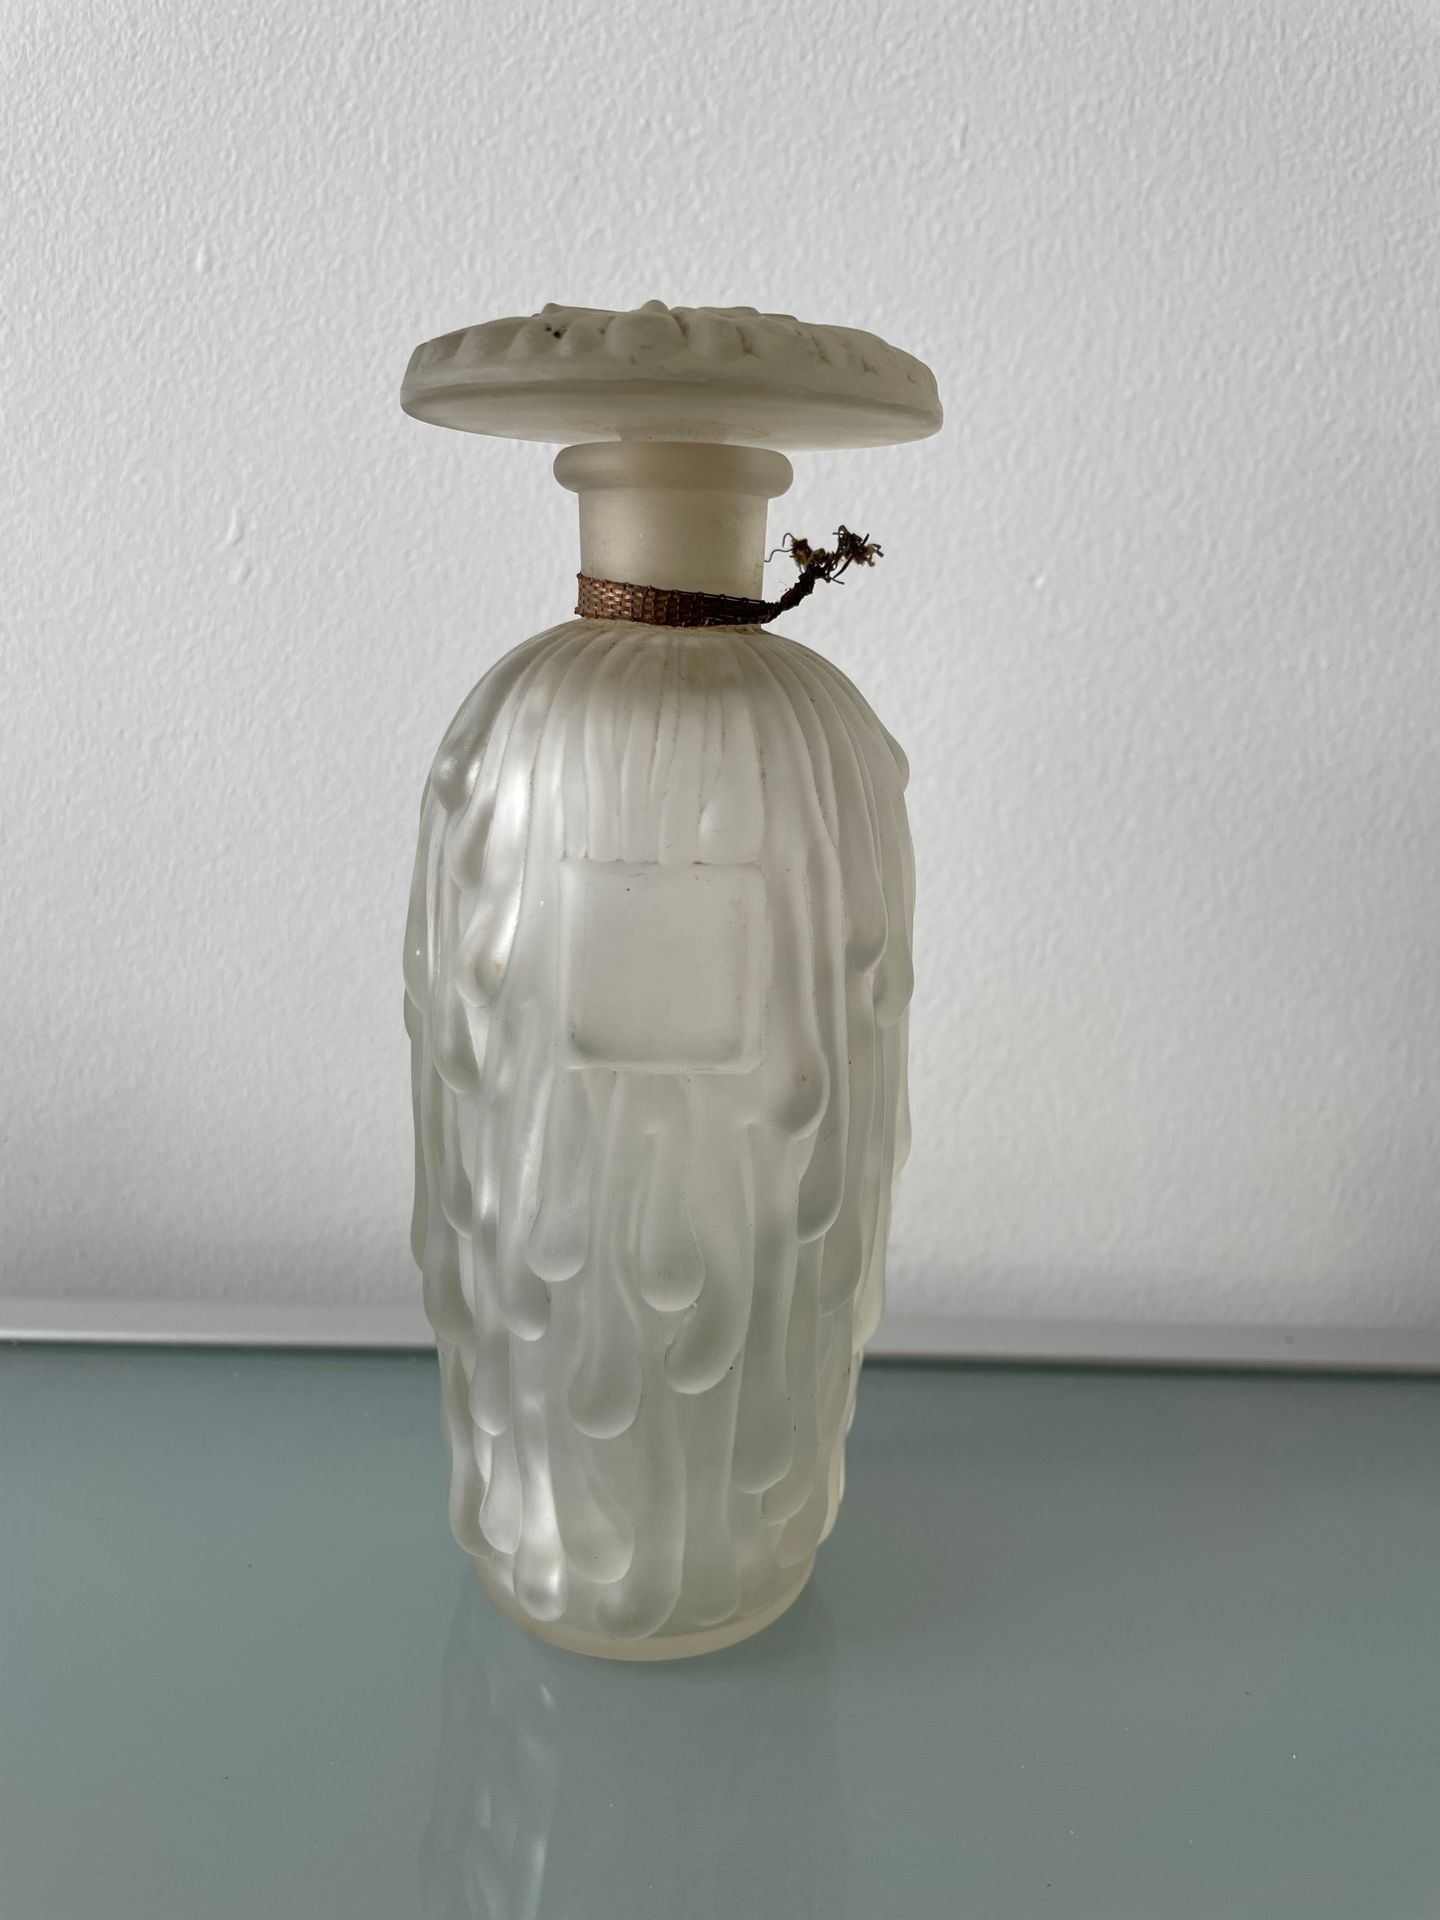 Null 伊莎贝尔香水公司的 "Berylune"。



压制的磨砂玻璃瓶，圆柱形部分饰有钟乳石的浮雕。瓶底的标题是 "Isambel Paris"。



&hellip;